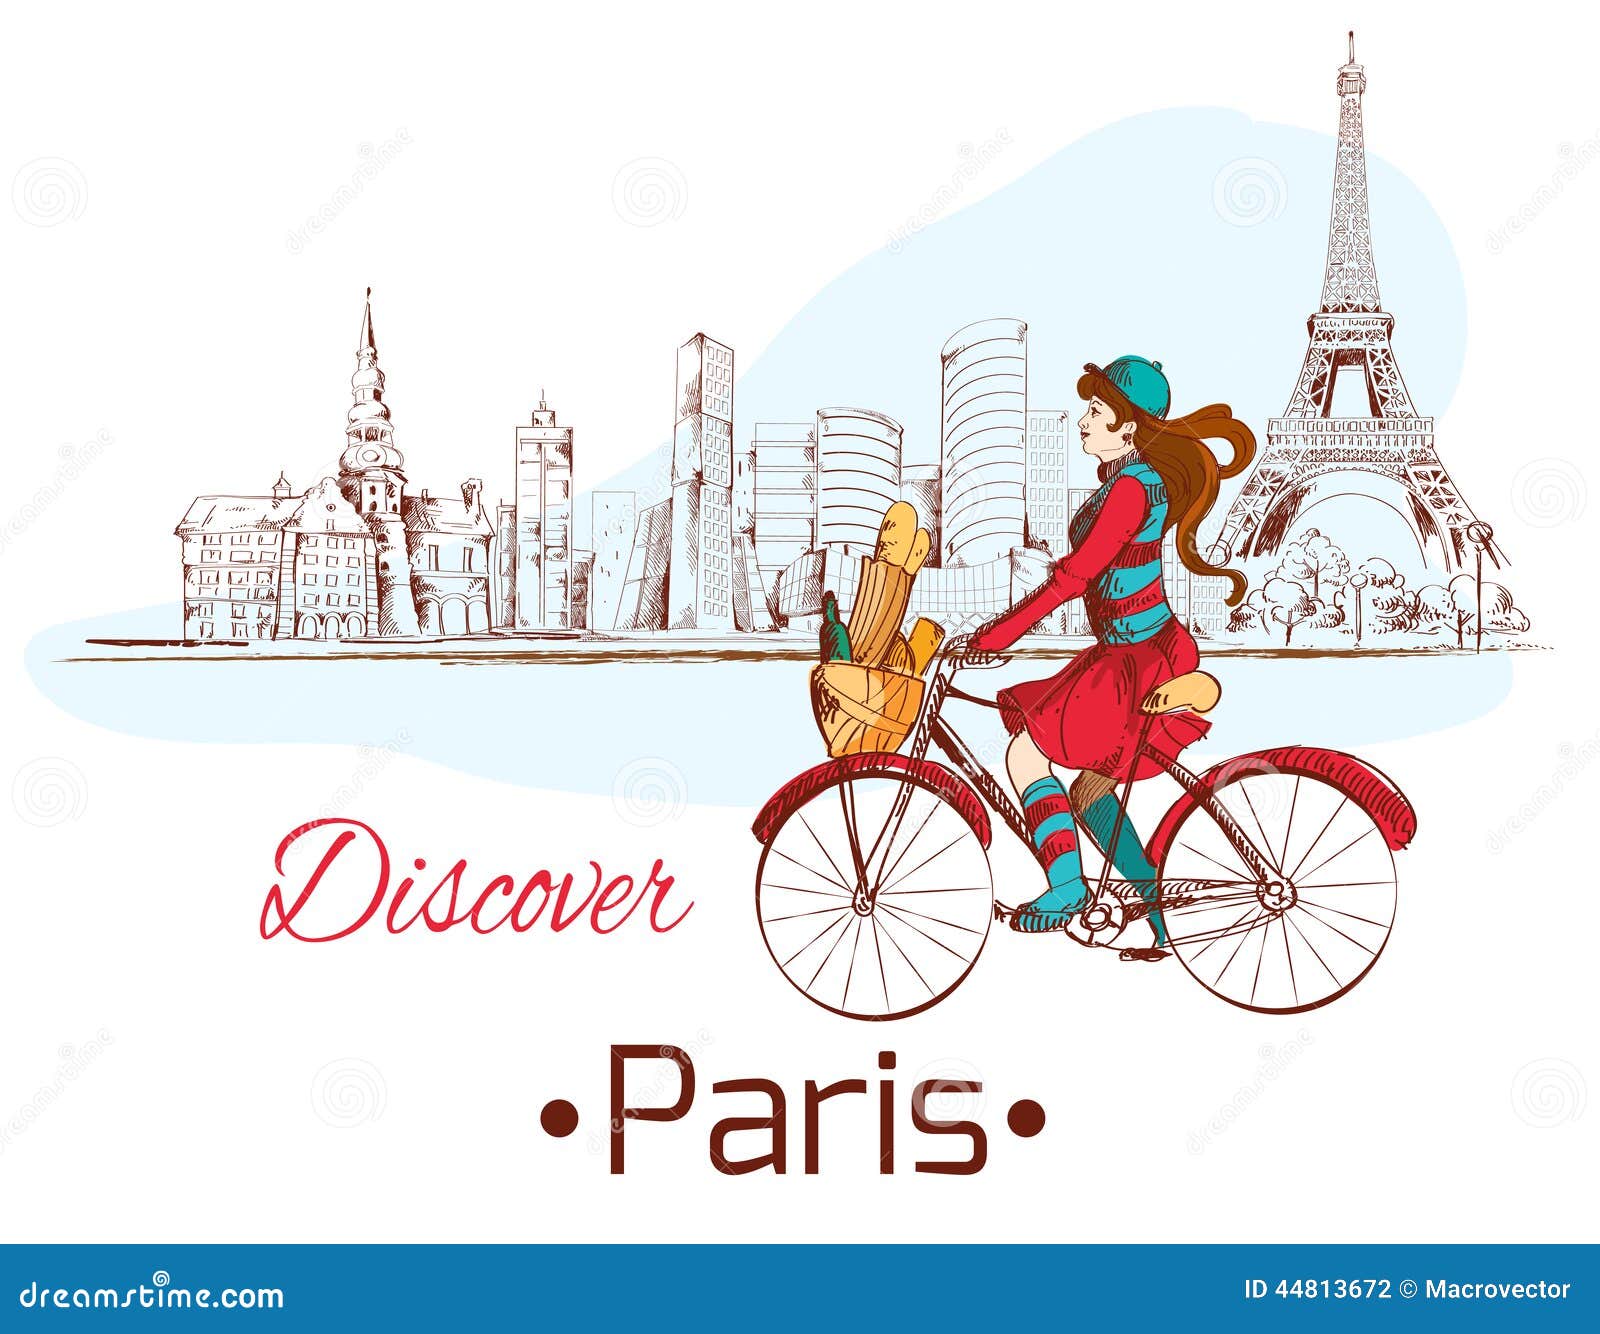 discover paris poster